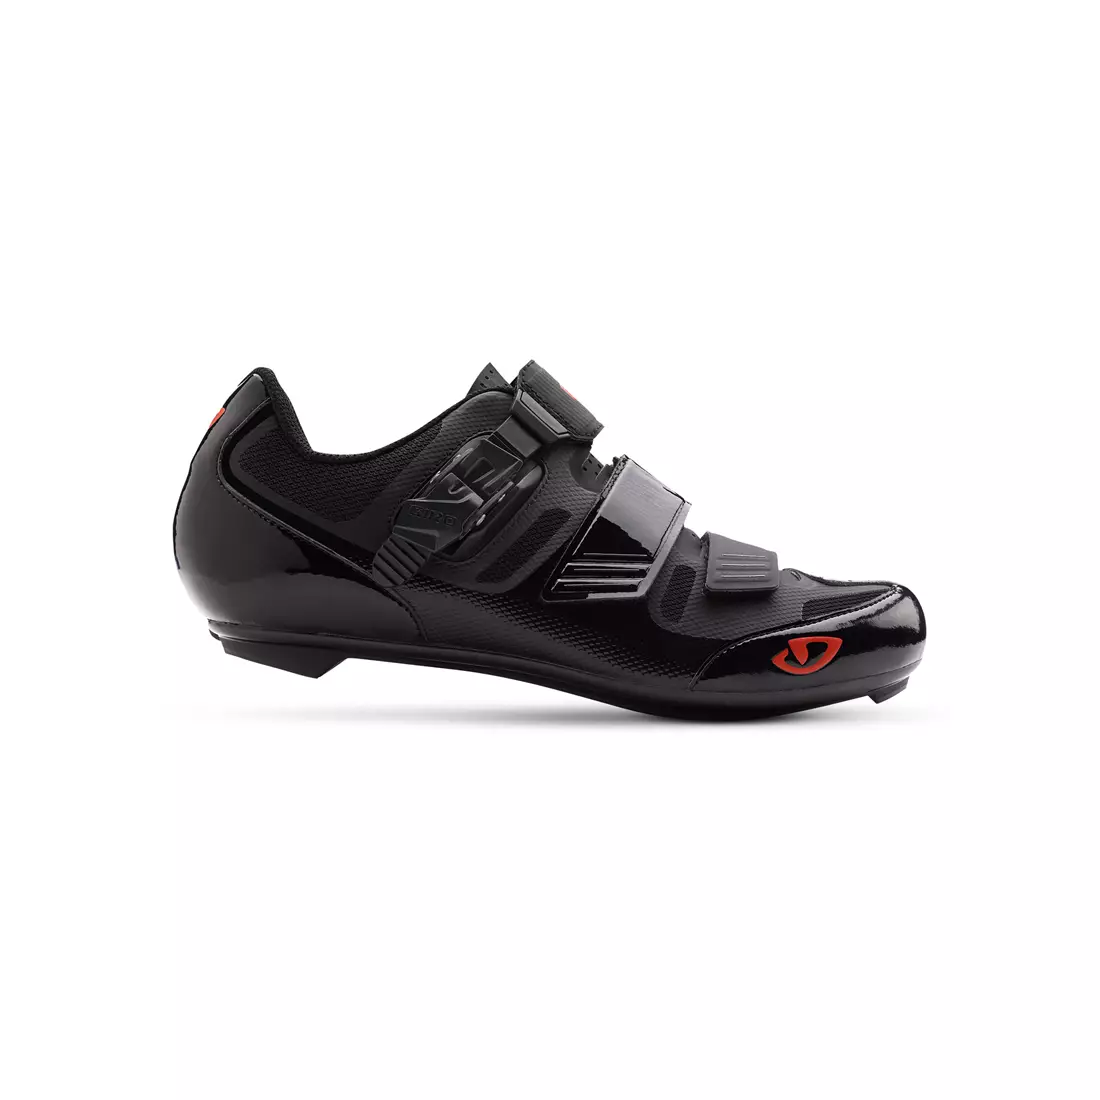 Férfi kerékpáros cipő GIRO APECKX II HV+ black bright red 